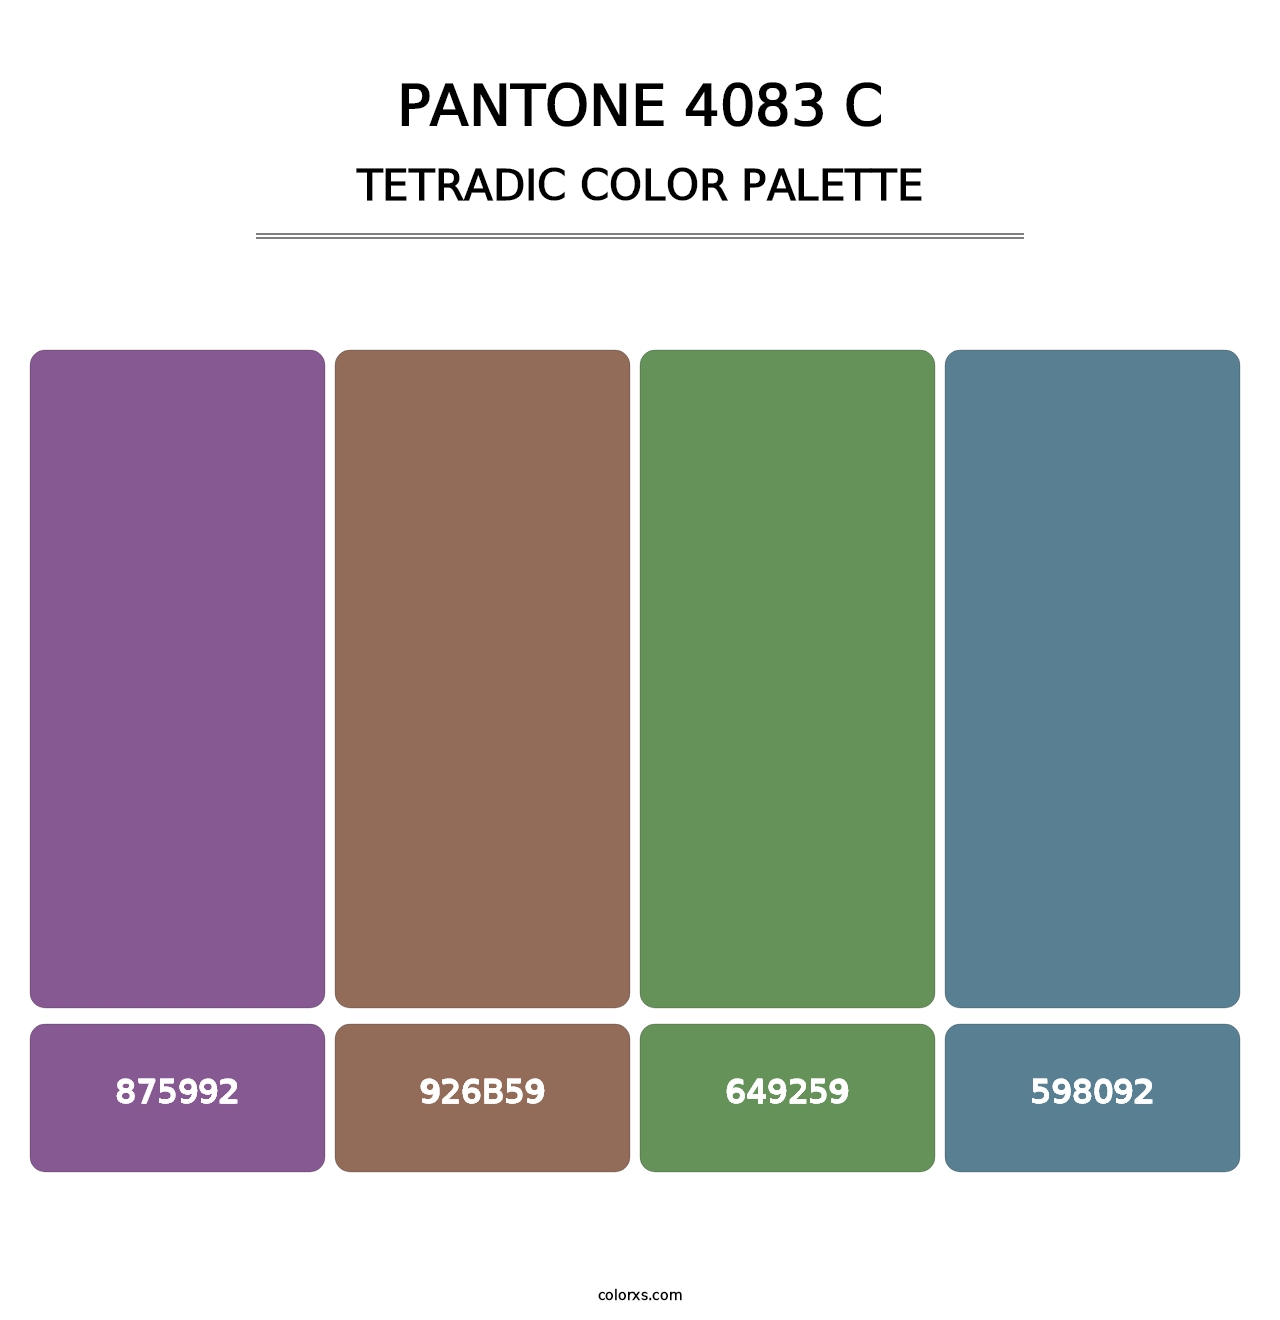 PANTONE 4083 C - Tetradic Color Palette